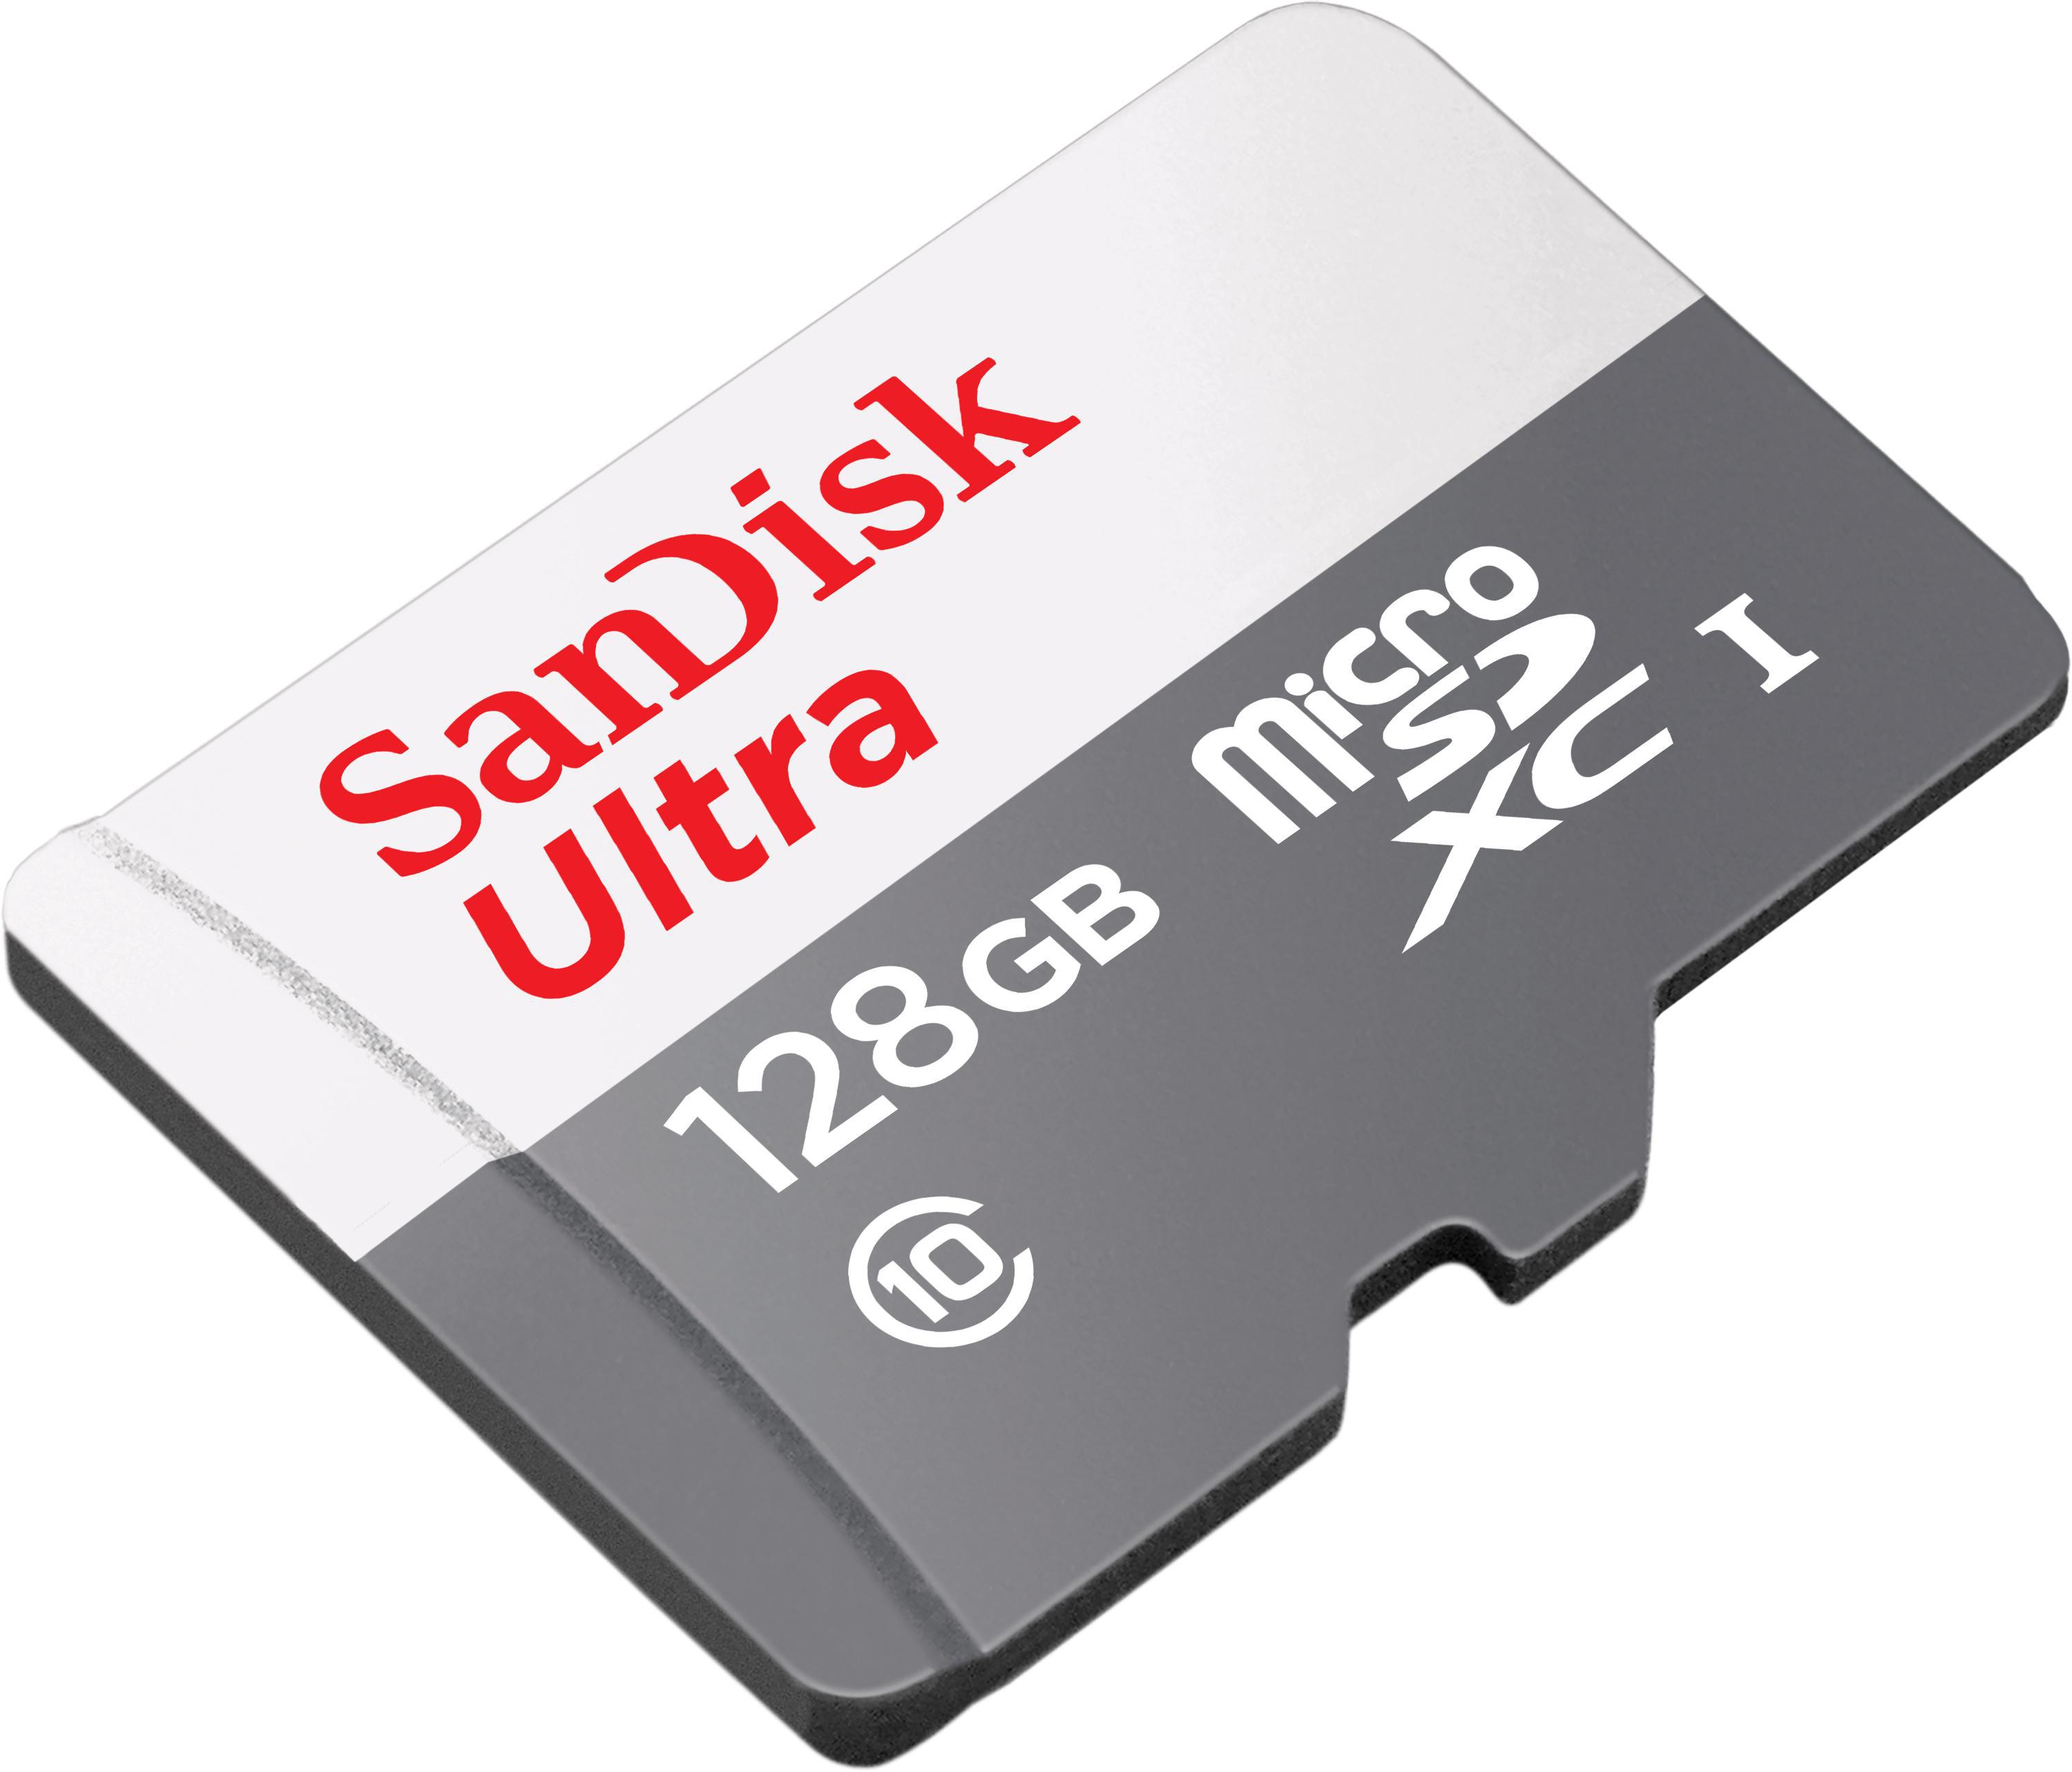 mit Ultra 128 GB, SANDISK für 120 MB/s Micro-SDXC Adapter UHS-I Speicherkarte, Tablets,